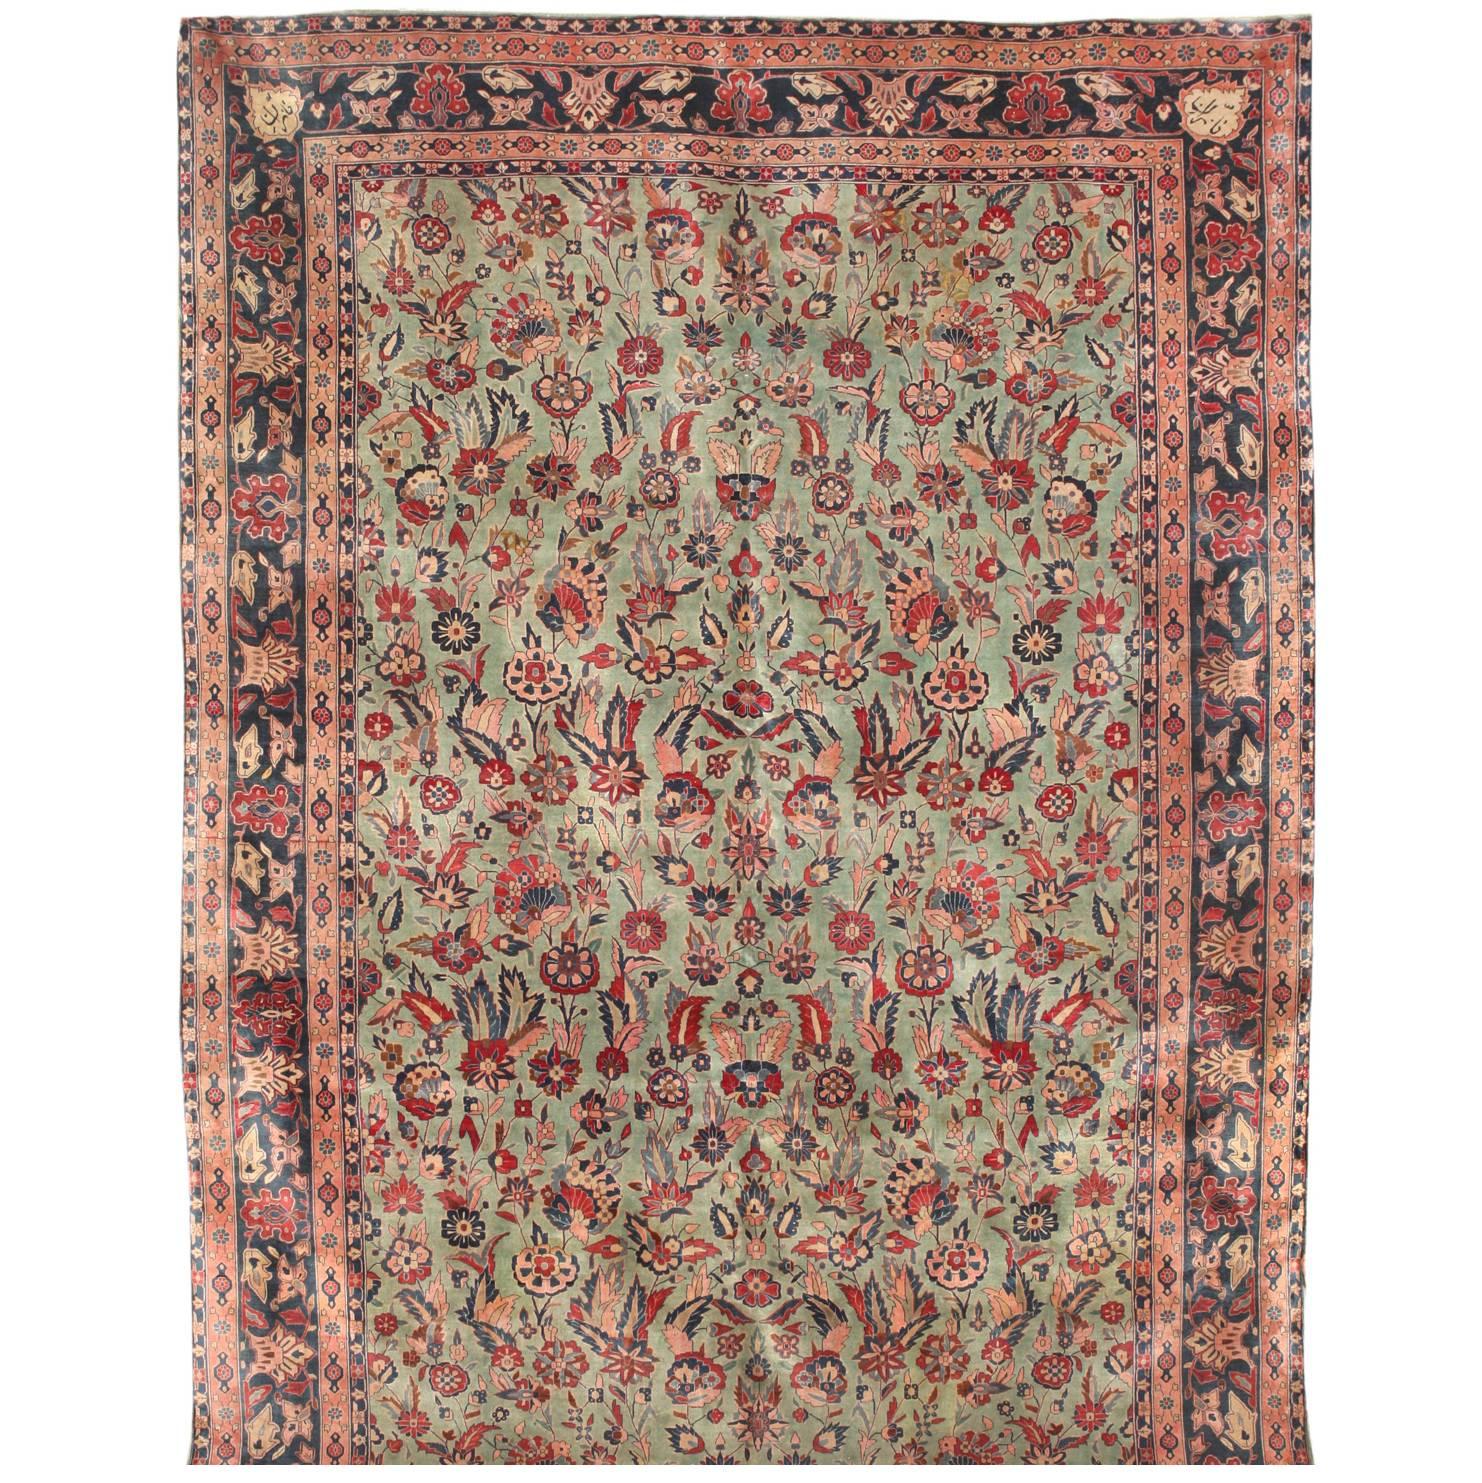 Exceptional Antique Persian Kashan Carpet For Sale